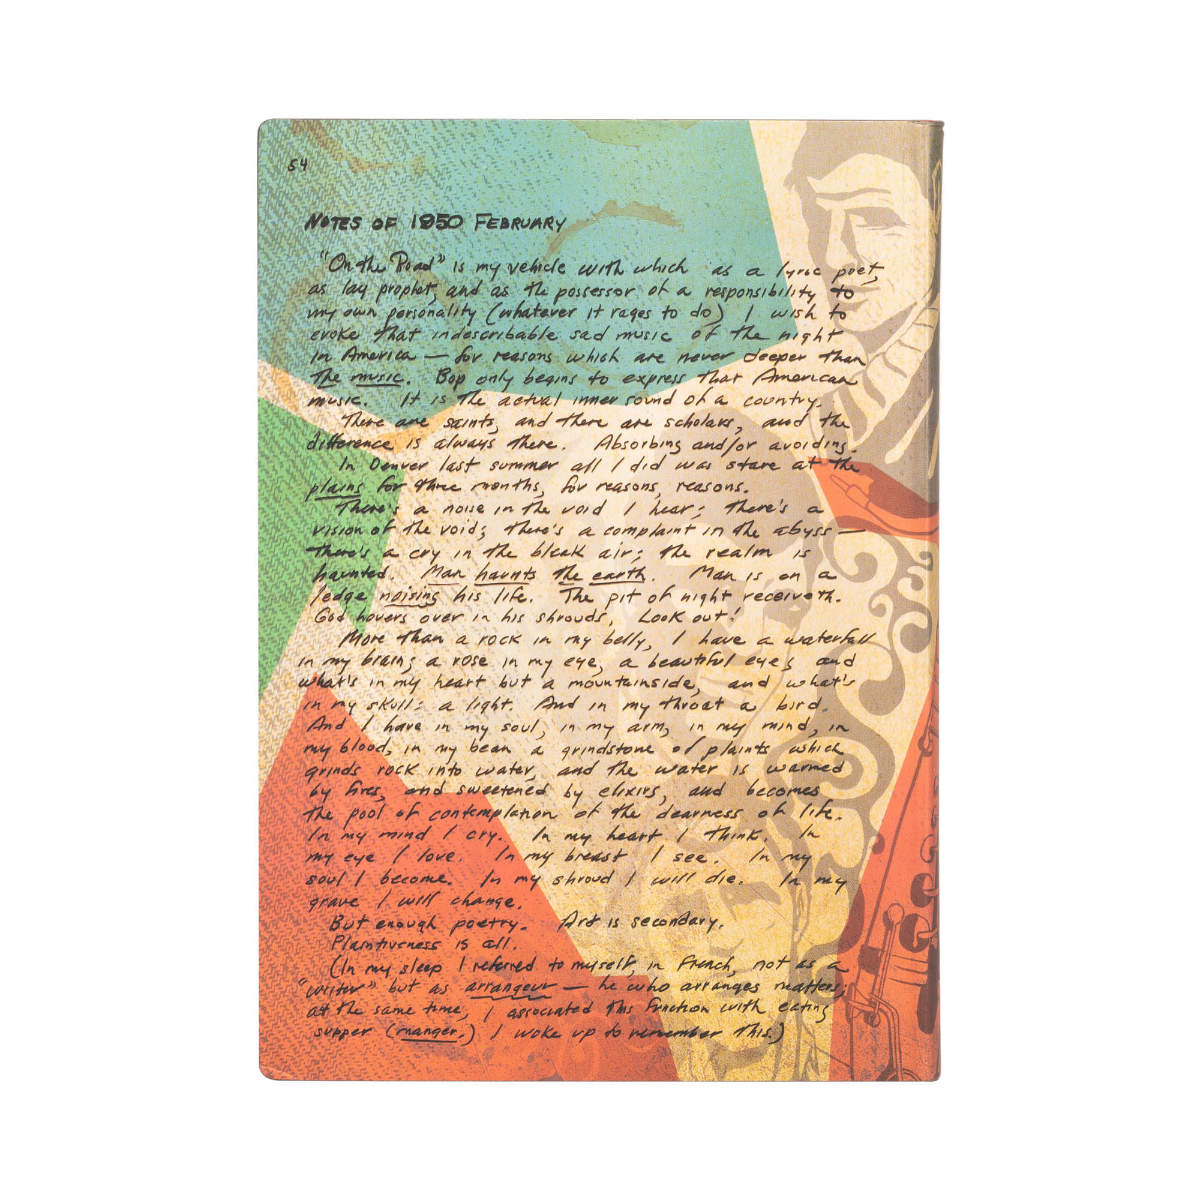 Paperblanks Flexis Jack Kerouac On the Road Midi Journal